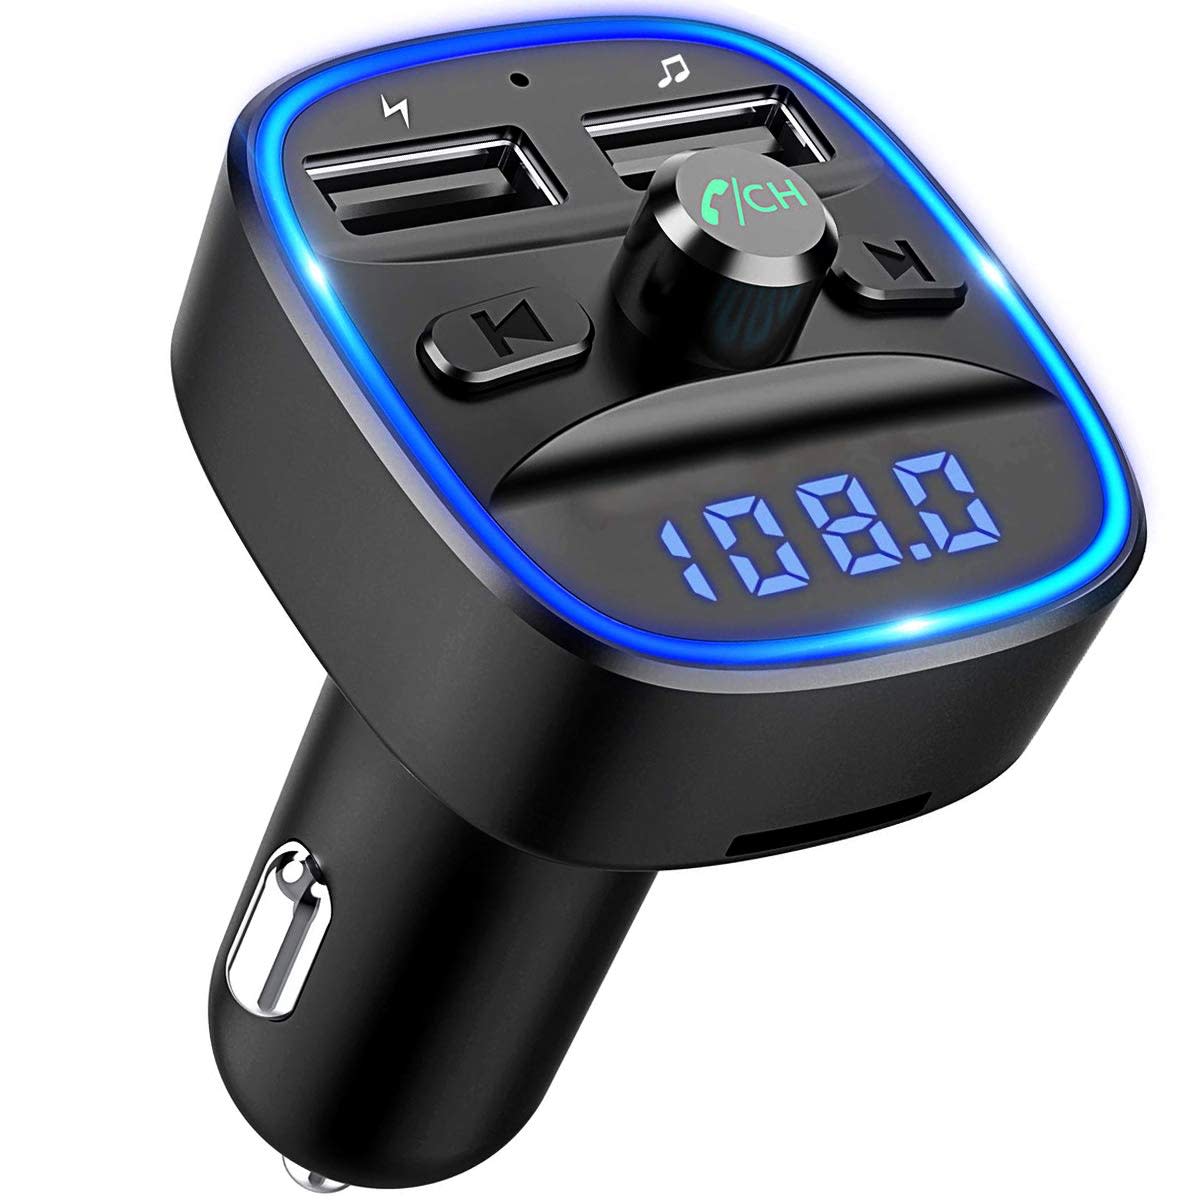 Bluetooth FM Transmitter designed for your car